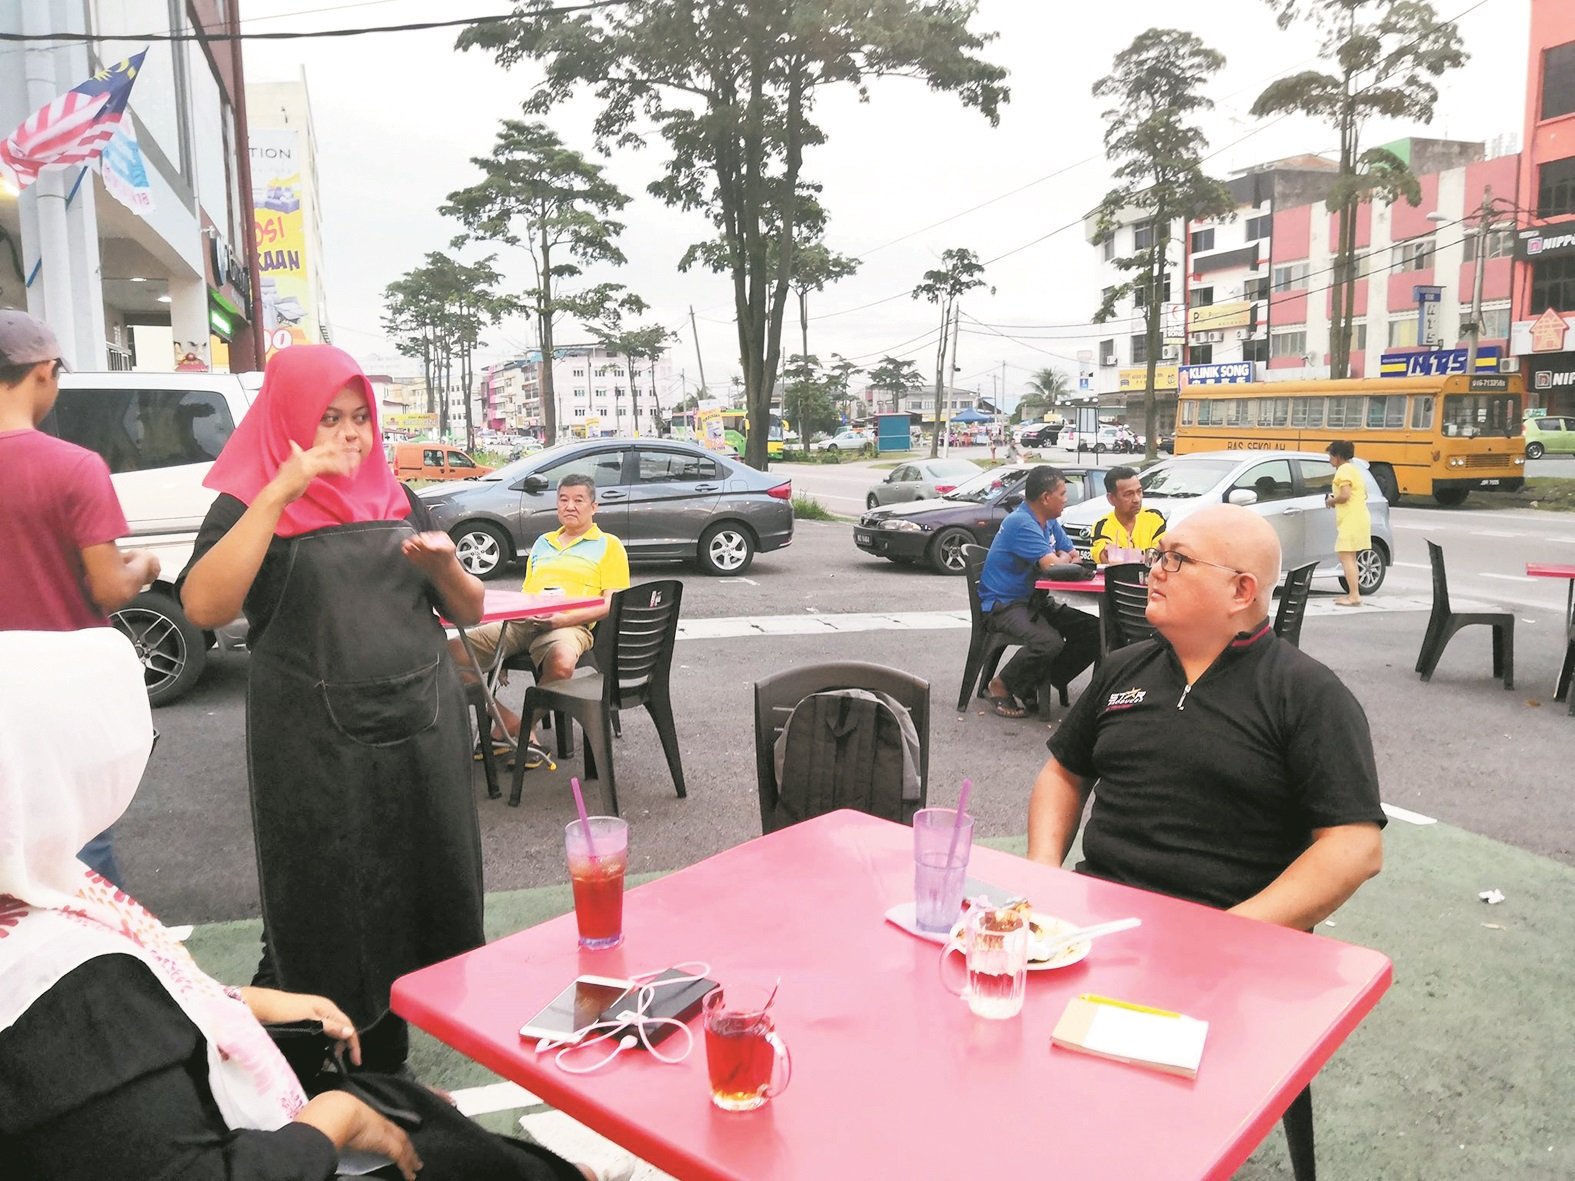 Pah Gemok餐厅获得不少善心人士支持光顾，在人手不足 时，耐心与聋哑员工用手语沟通。